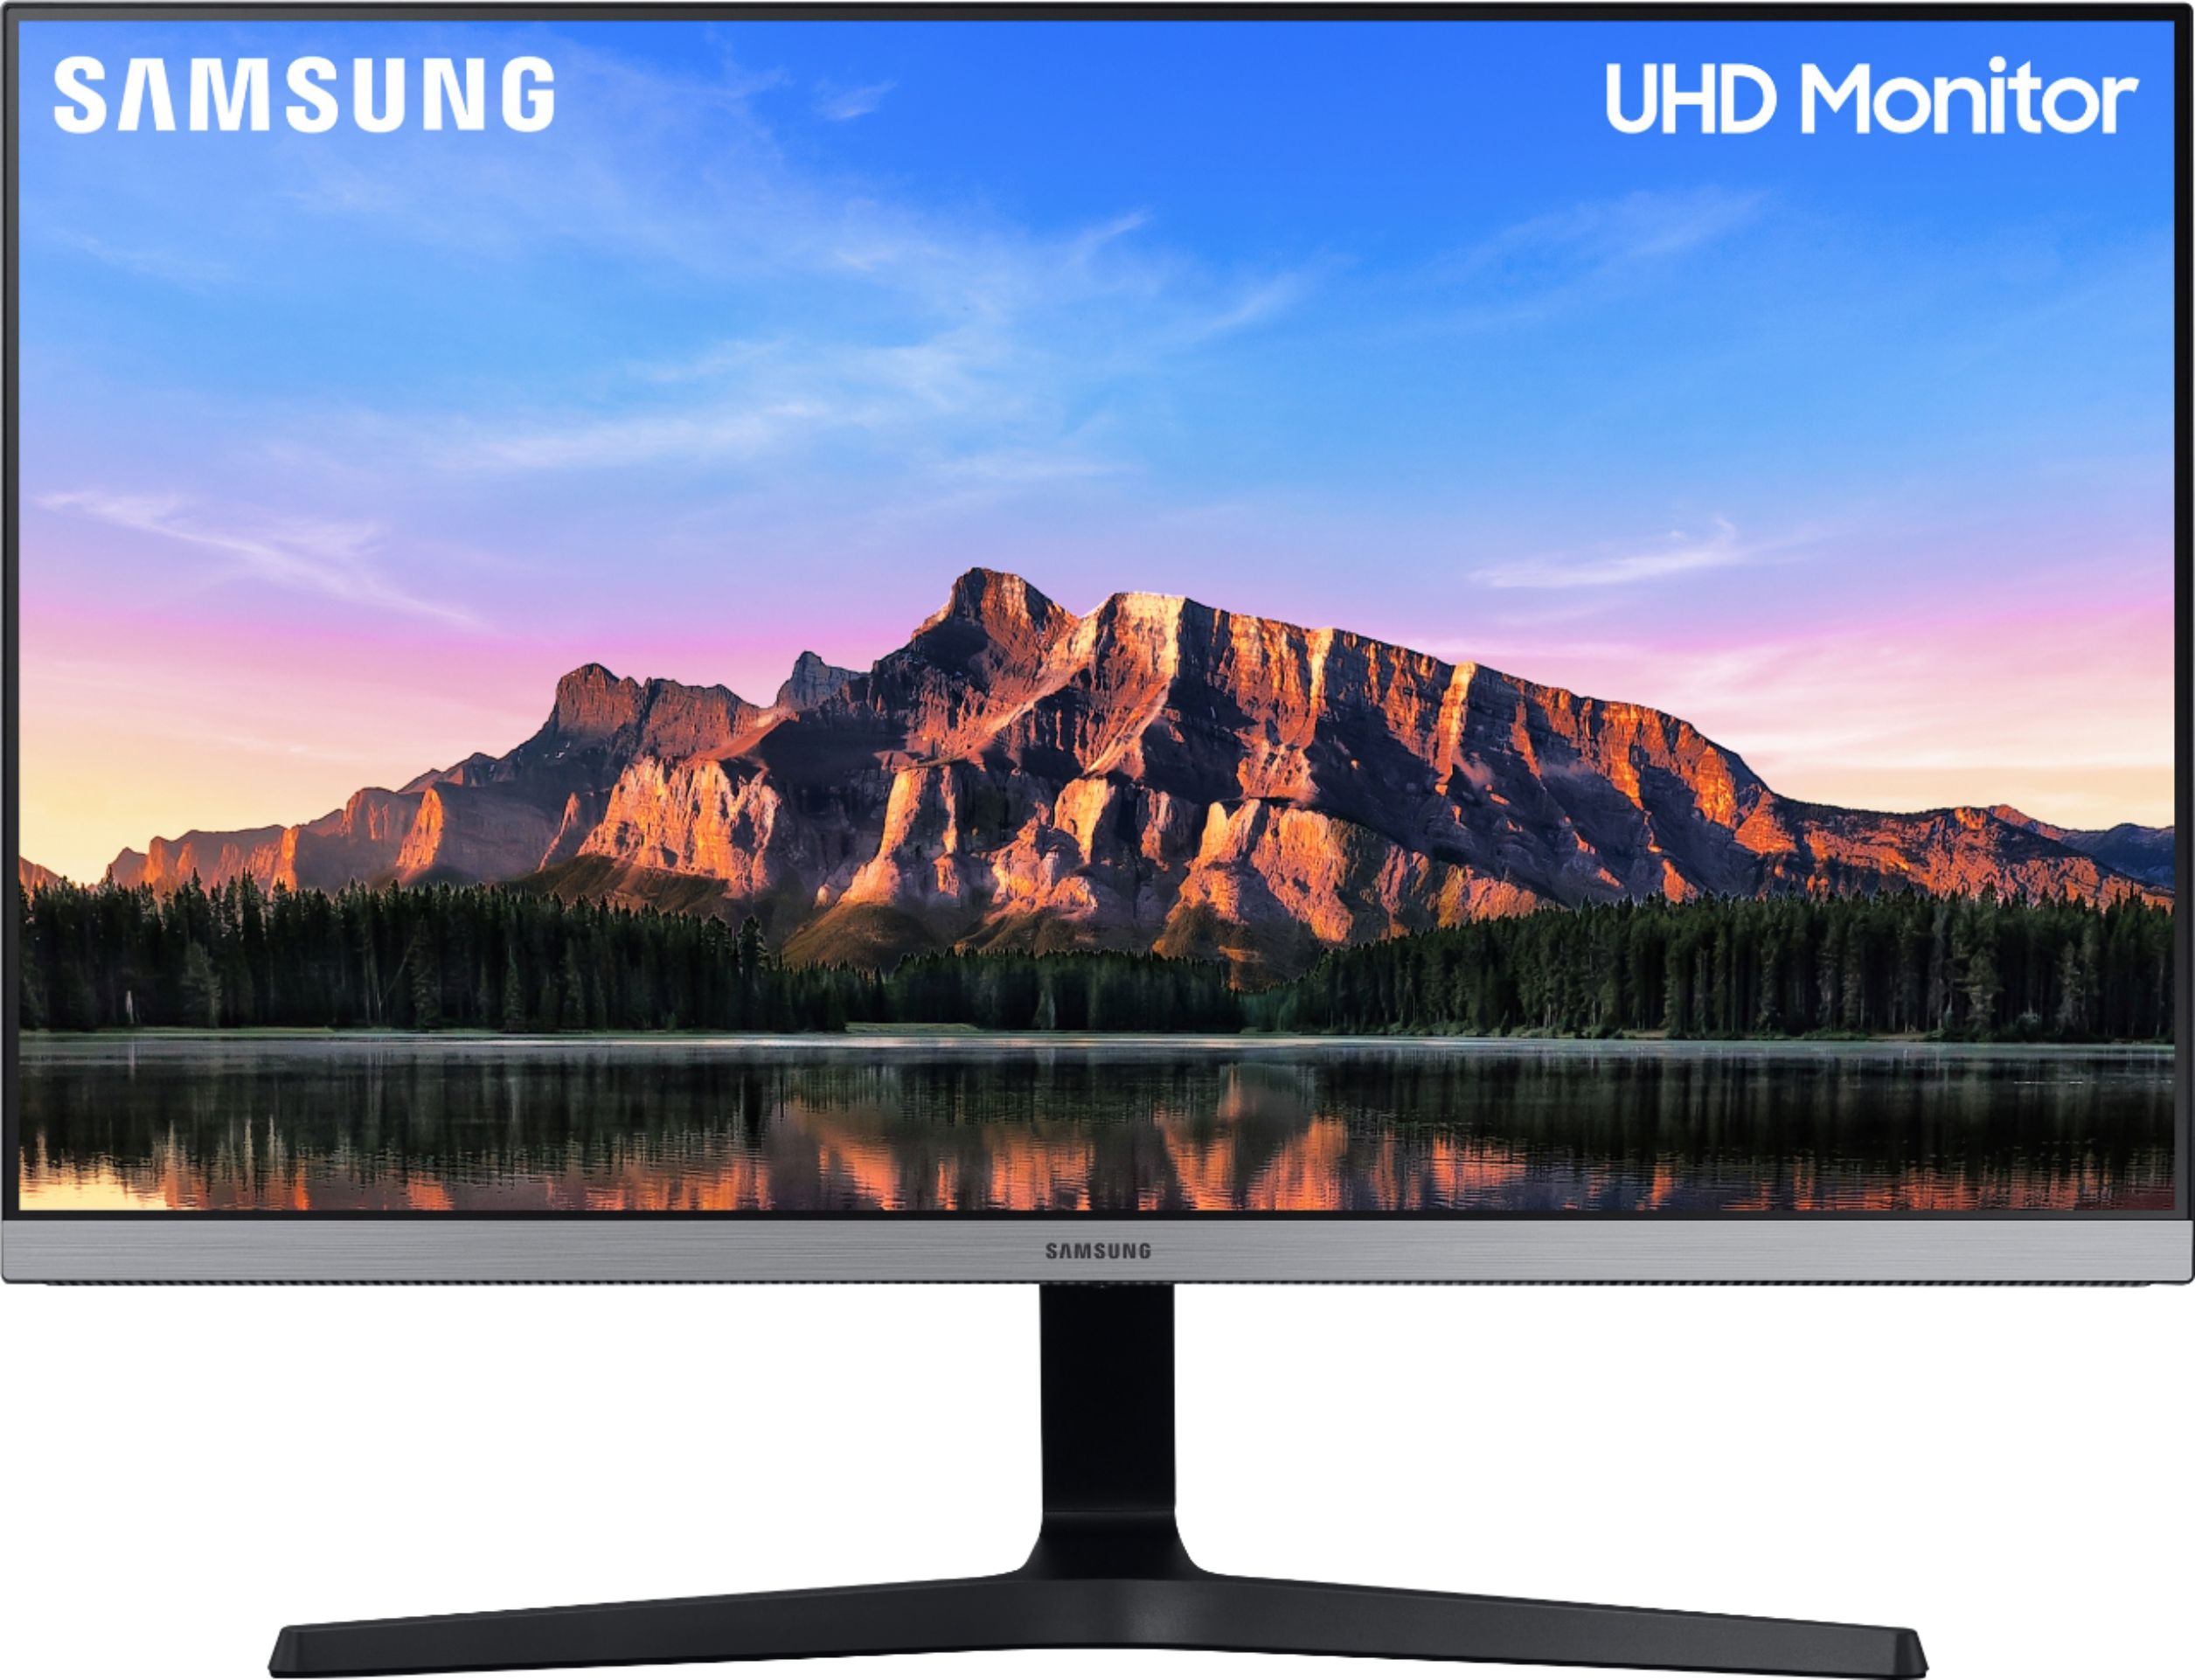 Samsung - 28” 4K UHD IPS AMD FreeSync HDR Monitor - Black $230 at Best Buy